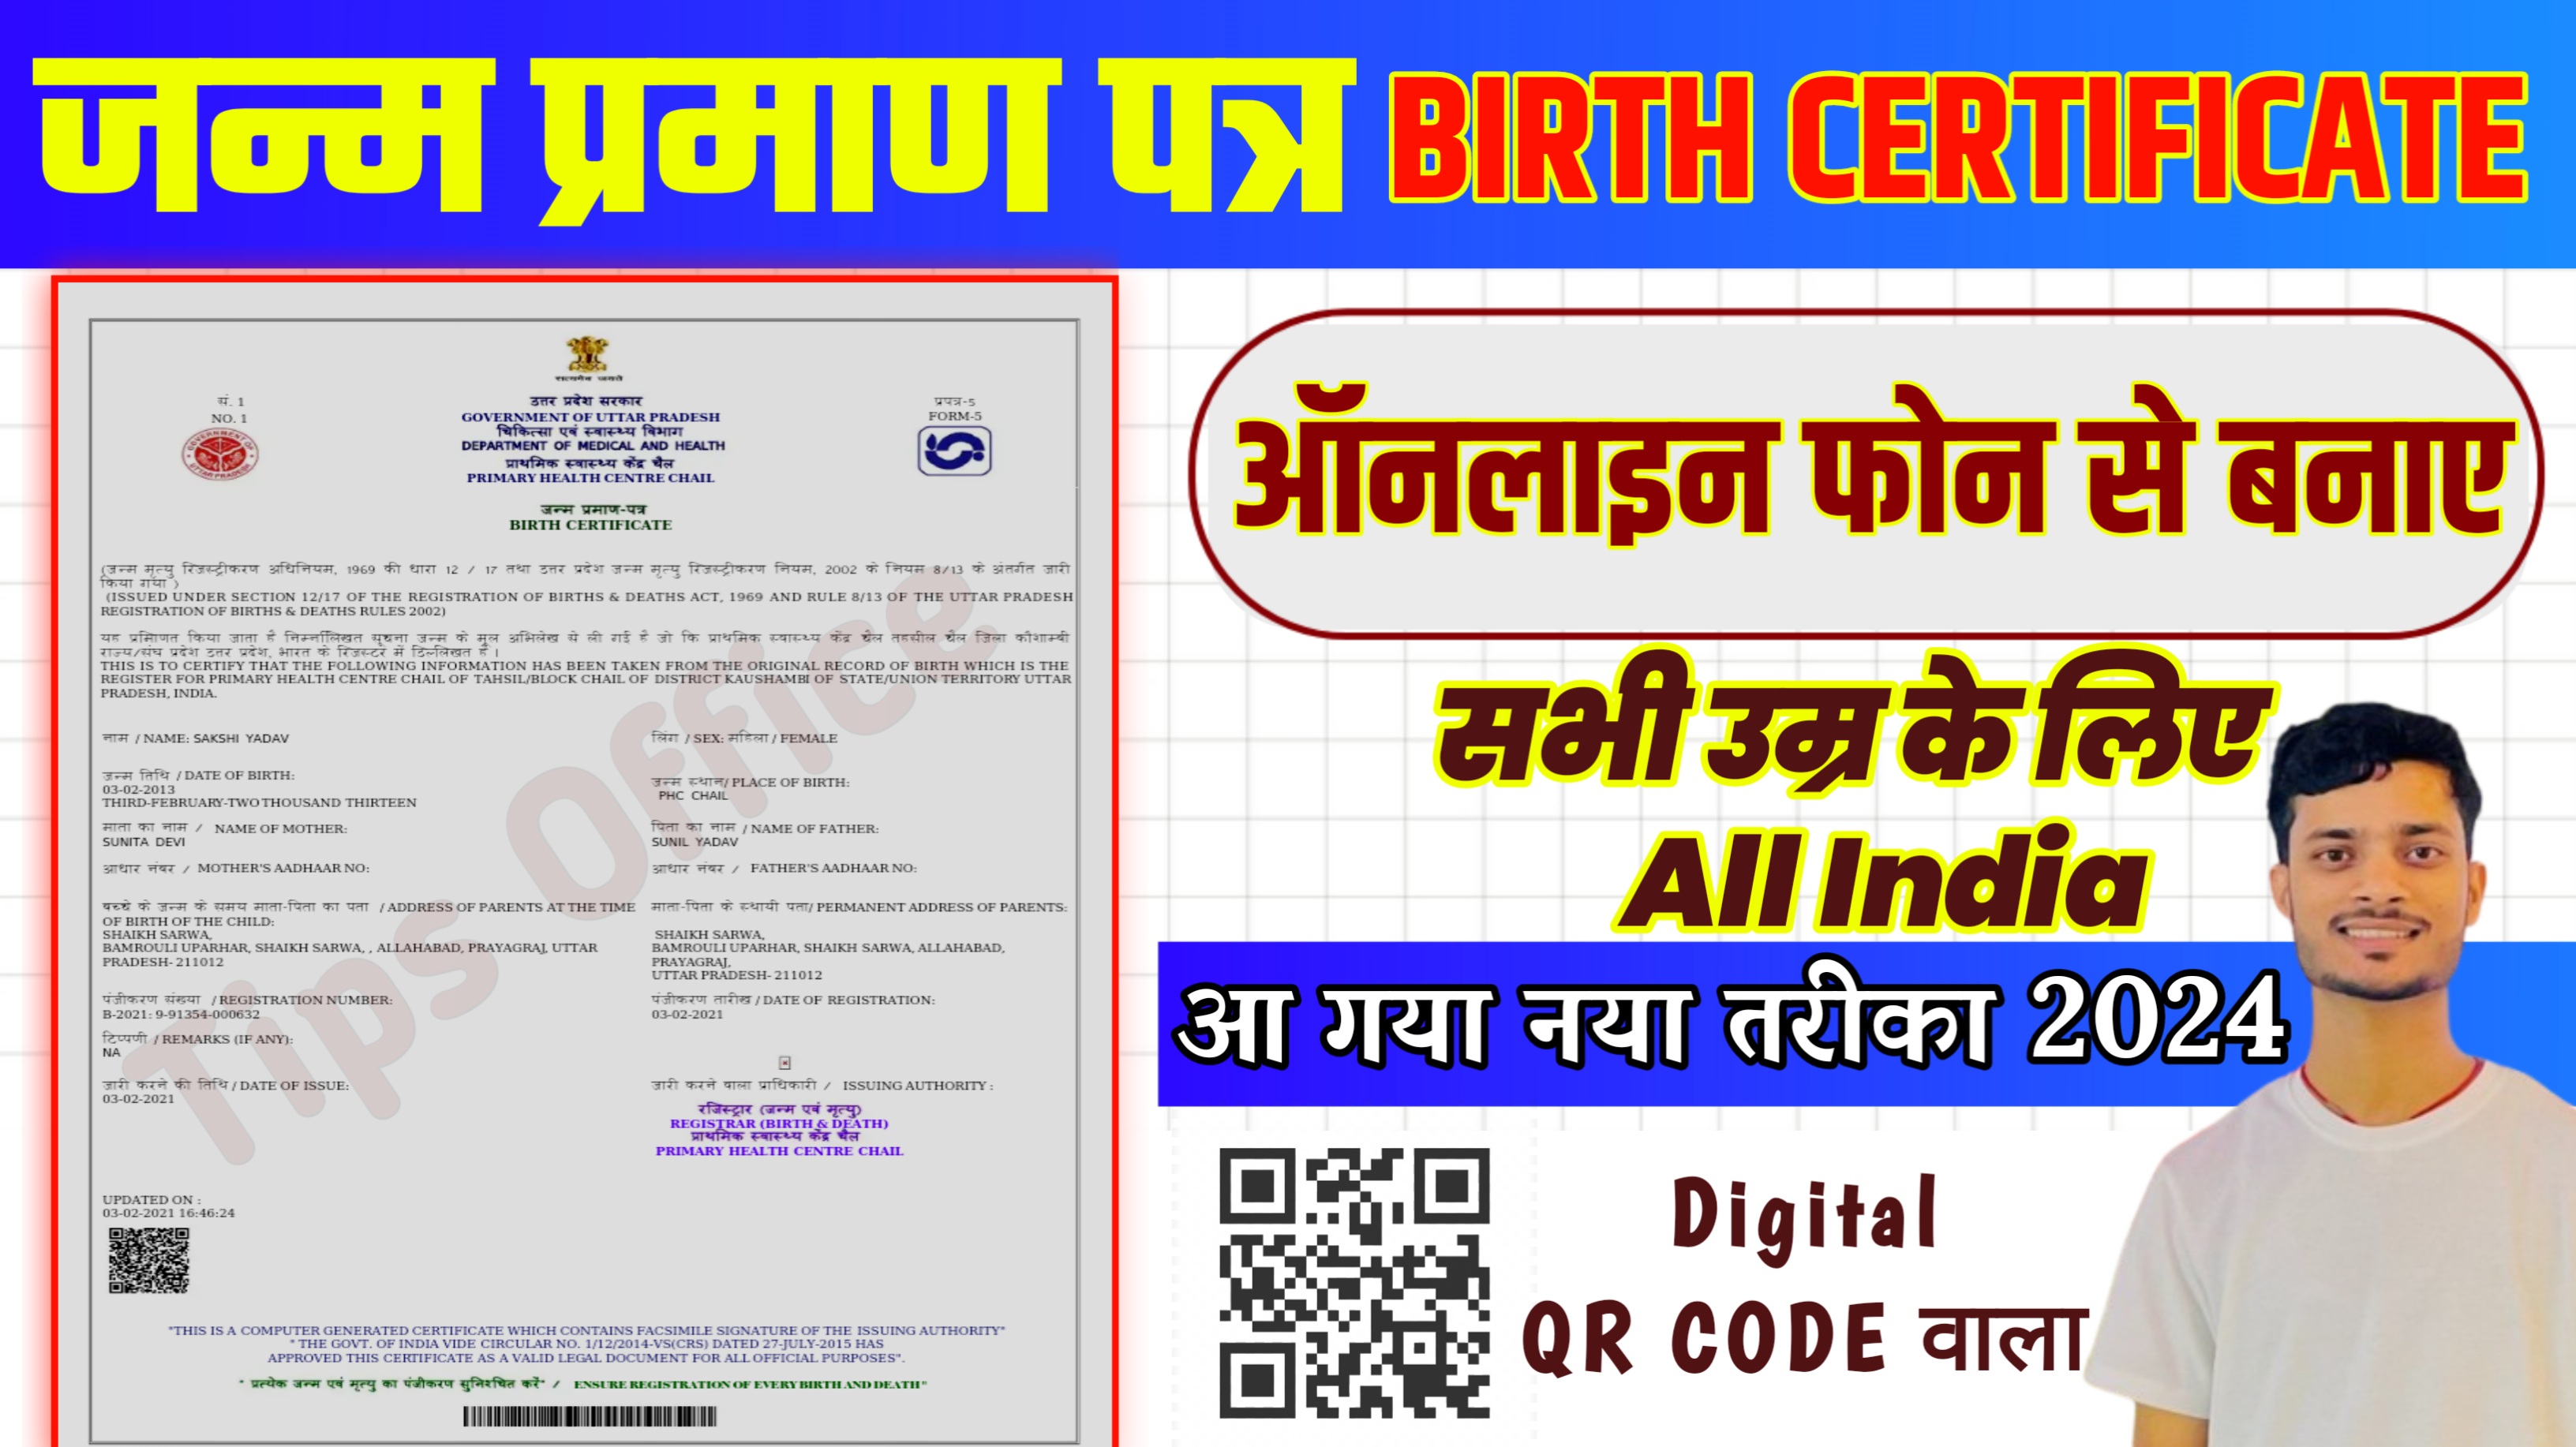 TipsOffice, tips office, Biharhelp.in, thumbnail, birth certificate, bihar, sarkari yojana, janm parman patri,